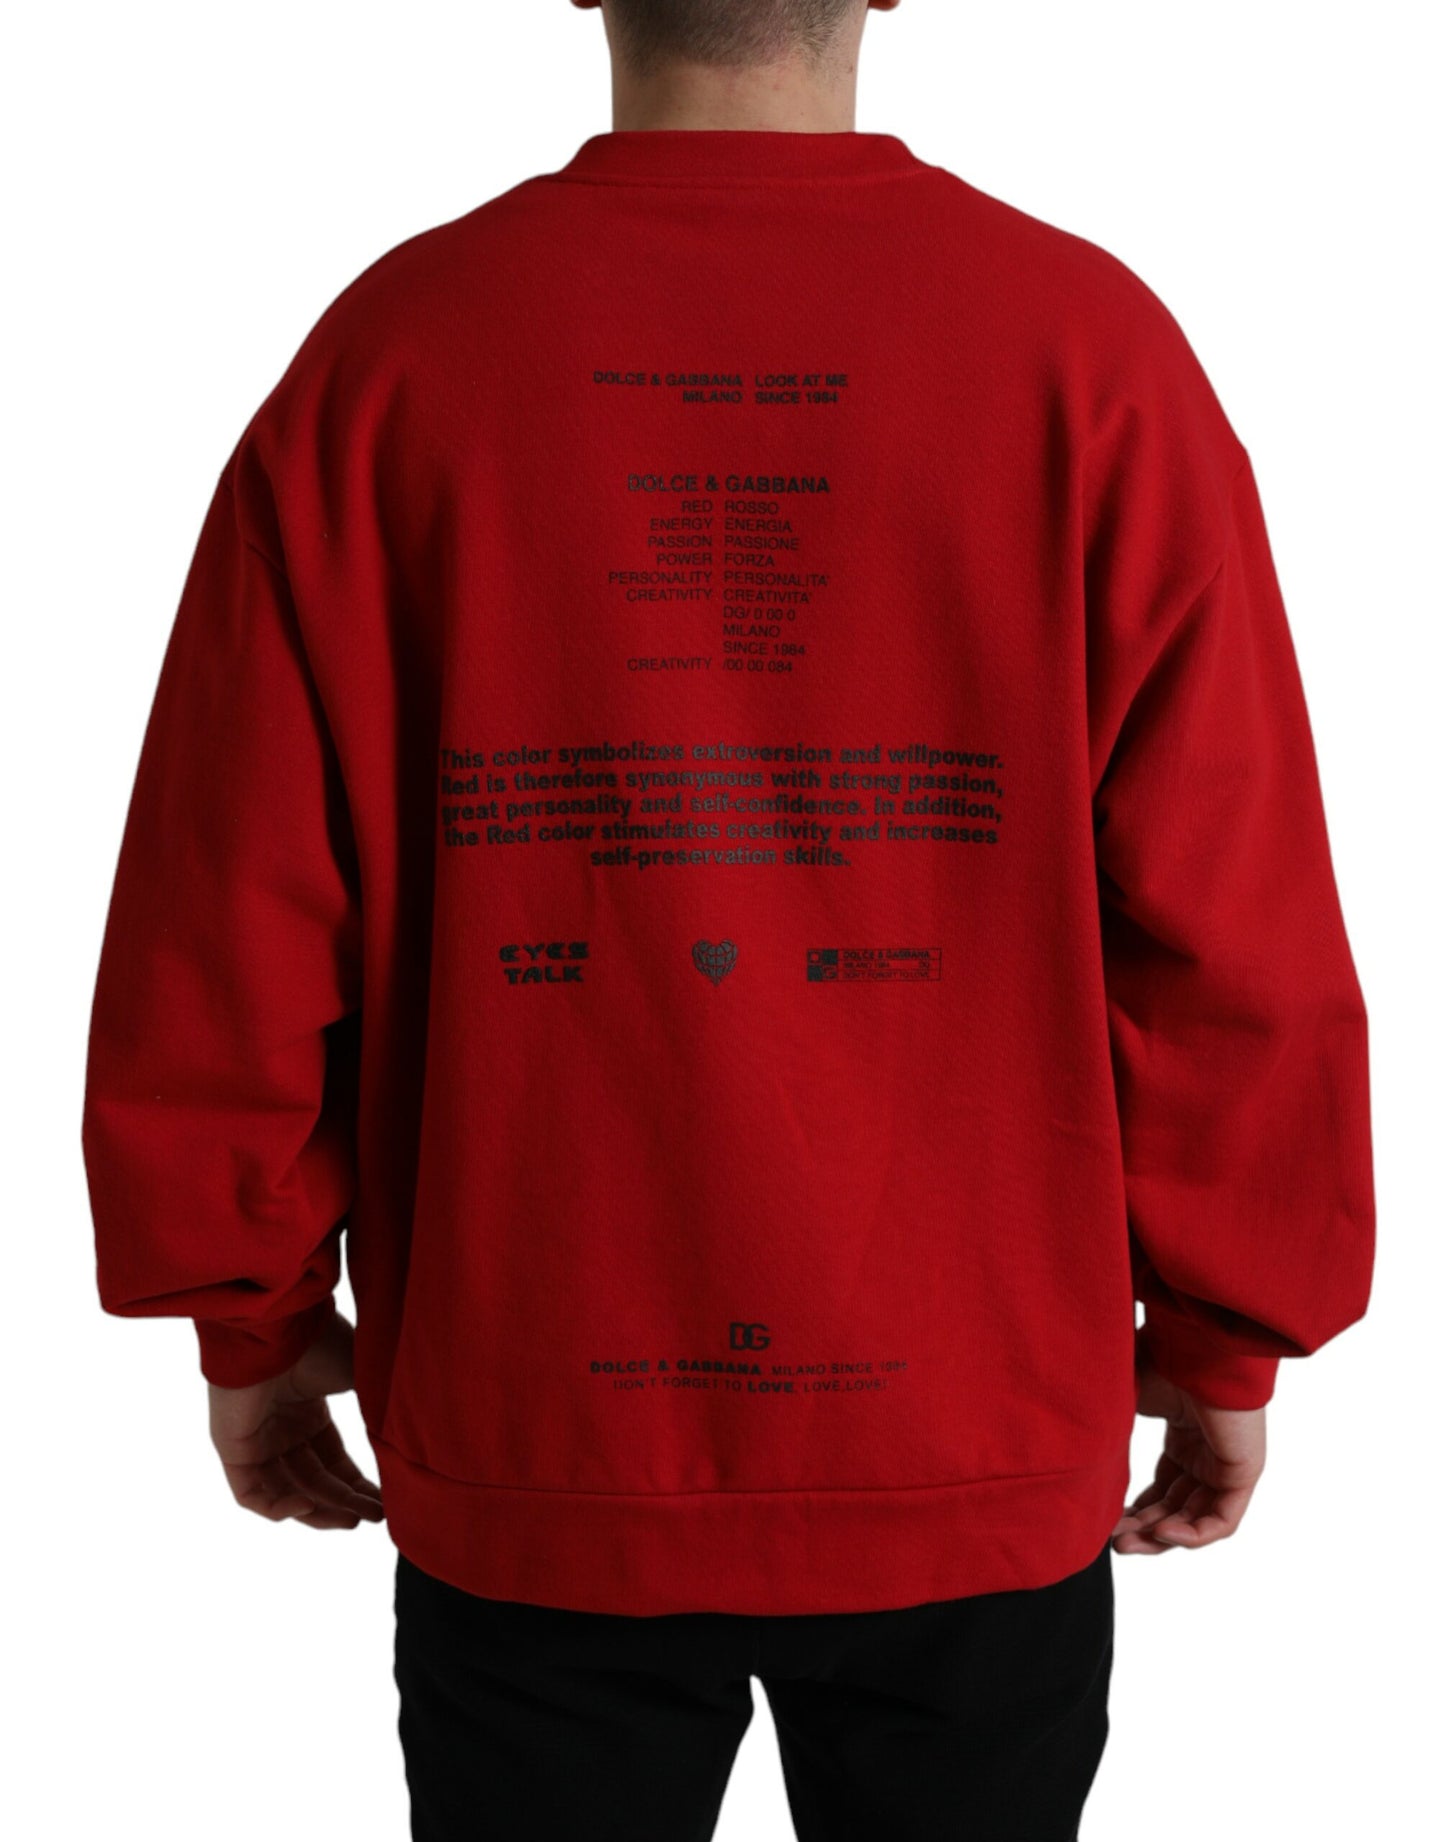 Stunning Red Graphic Print Crewneck Sweater